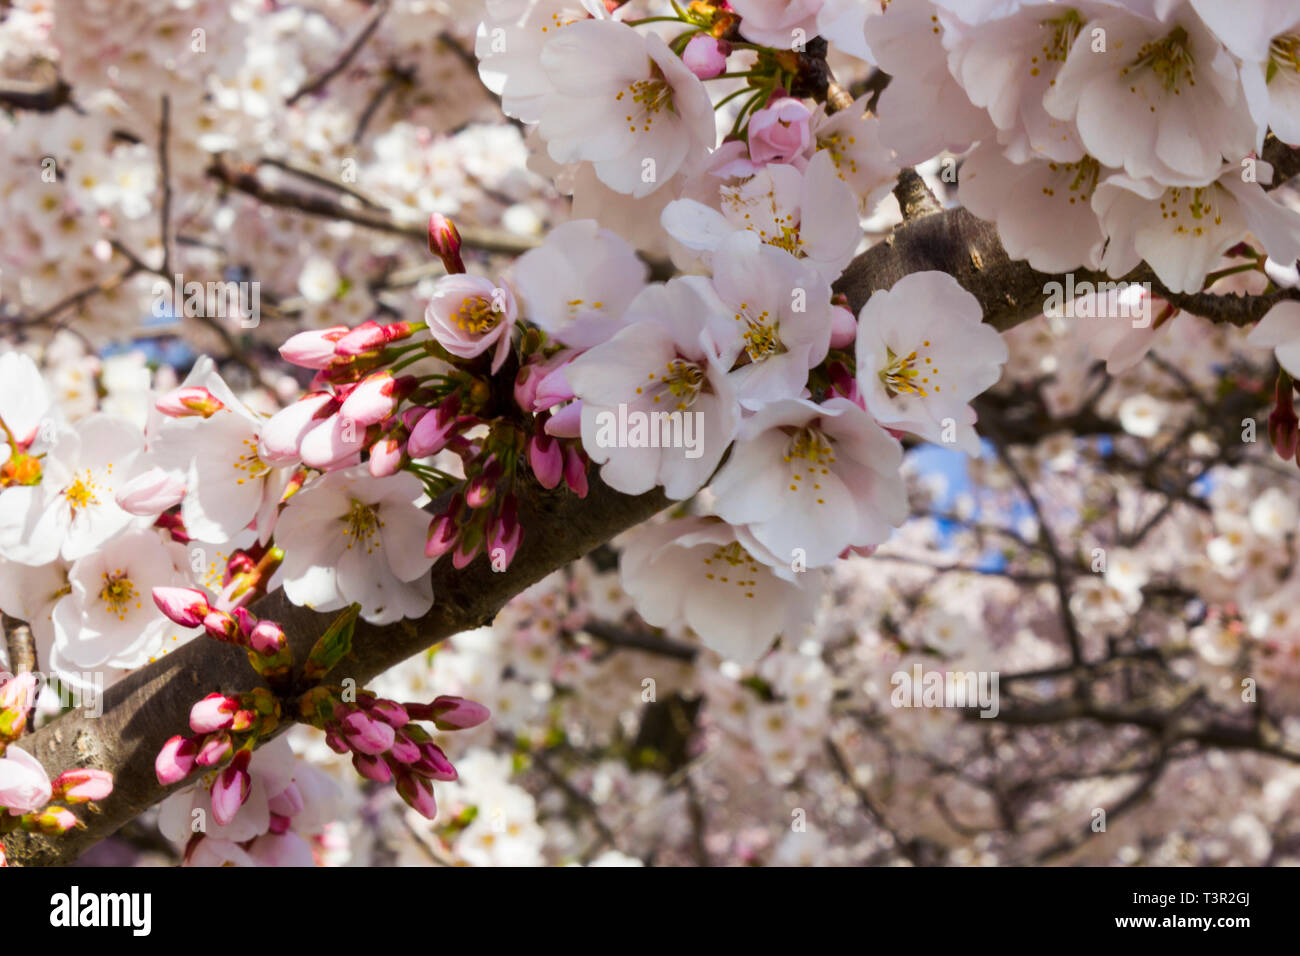 About the Kwanzan / Kanzan Cherry Blossoms Near the Tidal Basin